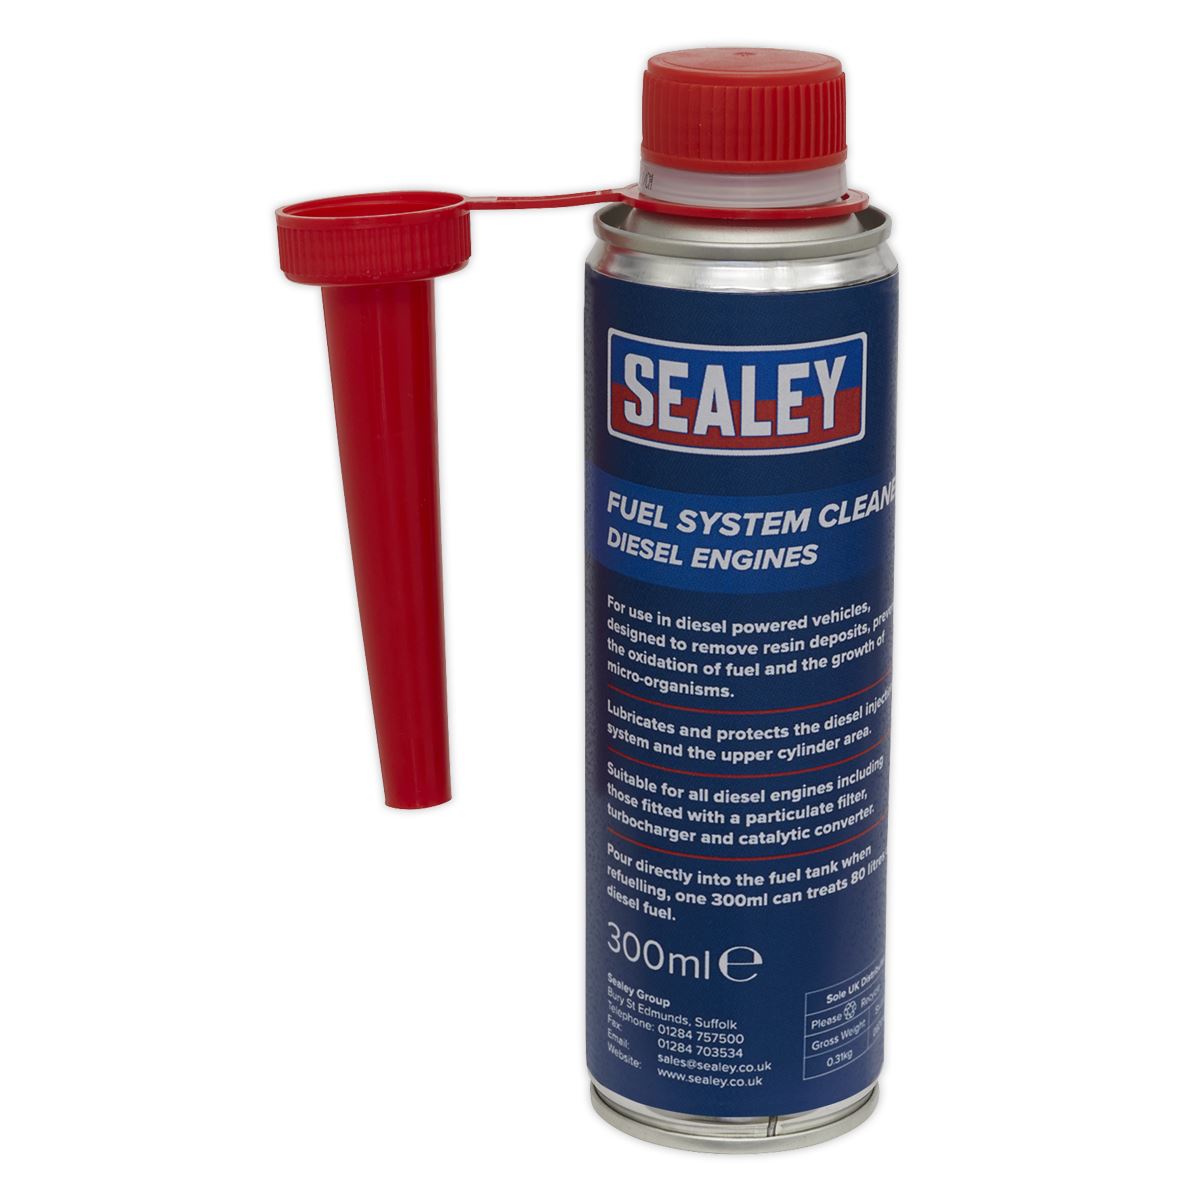 Sealey Fuel System Cleaner 300ml - Diesel Engines